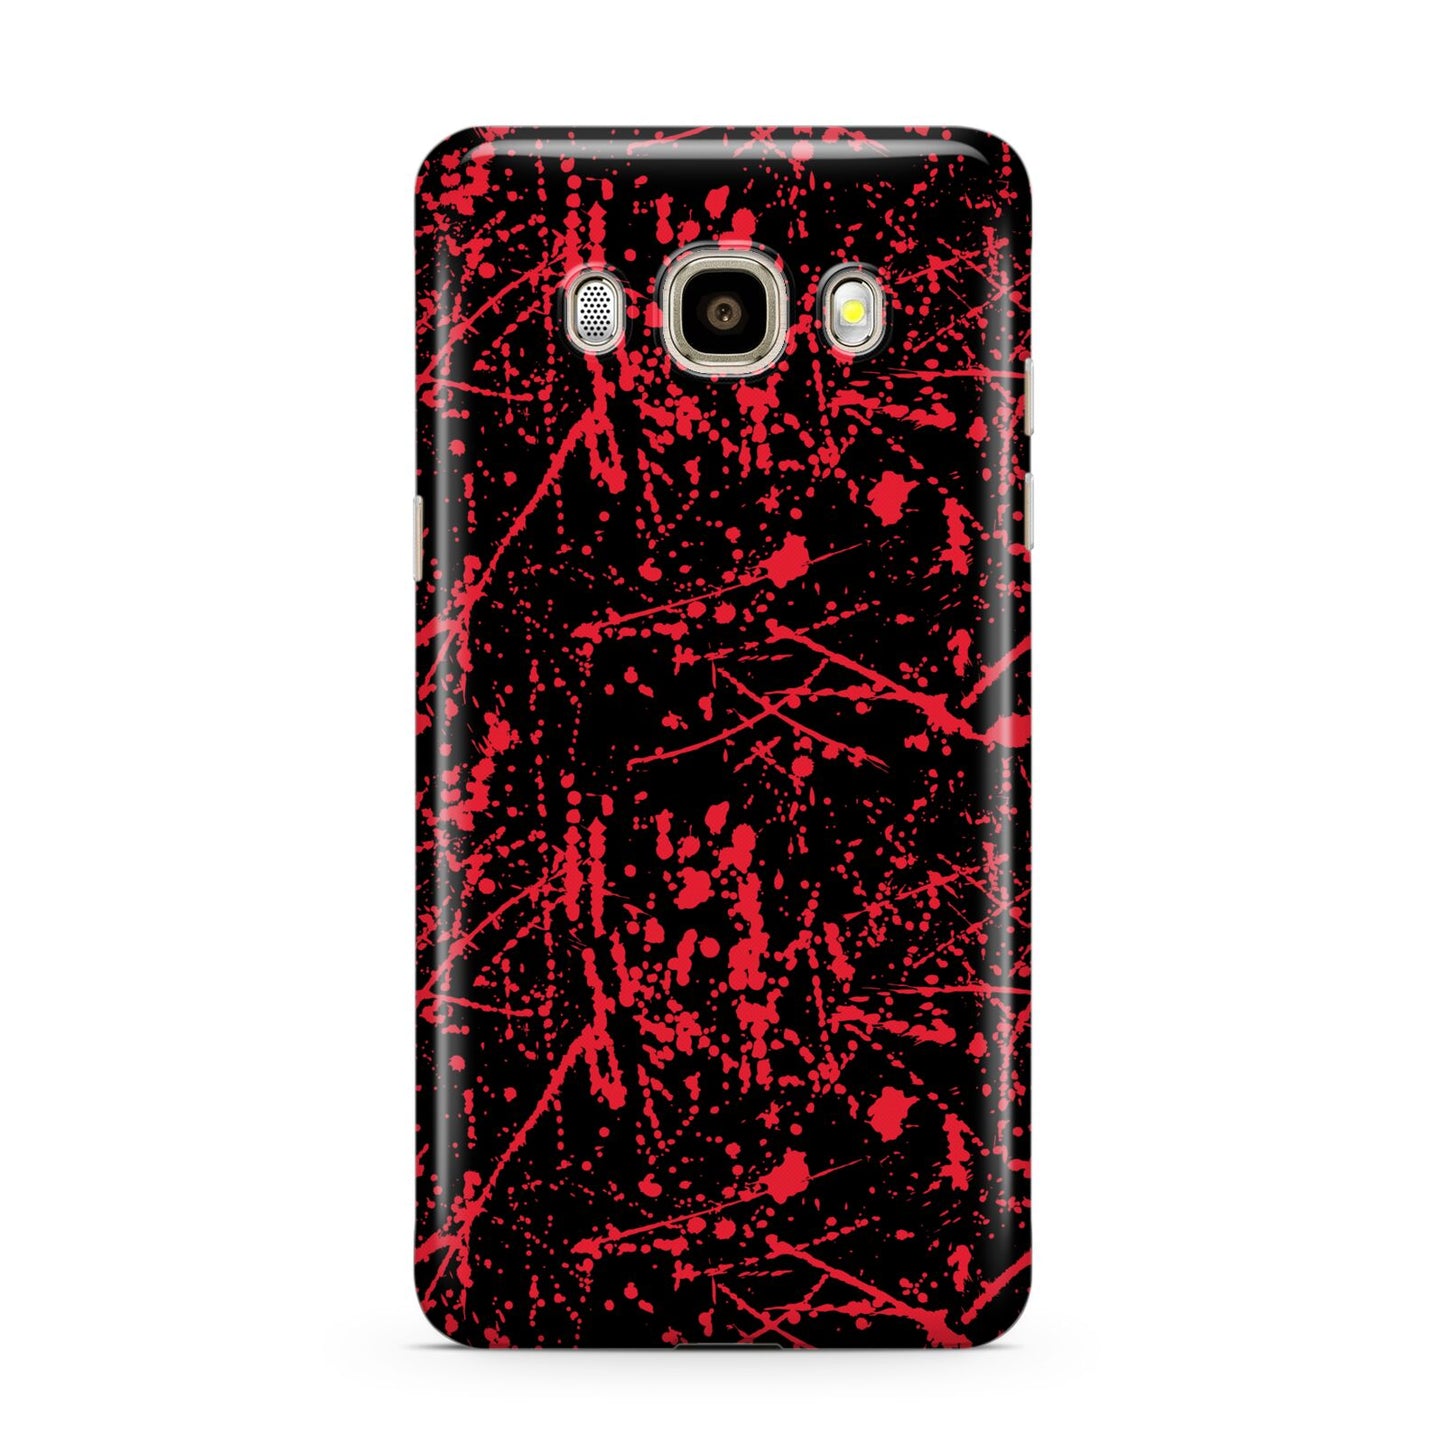 Blood Splatters Samsung Galaxy J7 2016 Case on gold phone